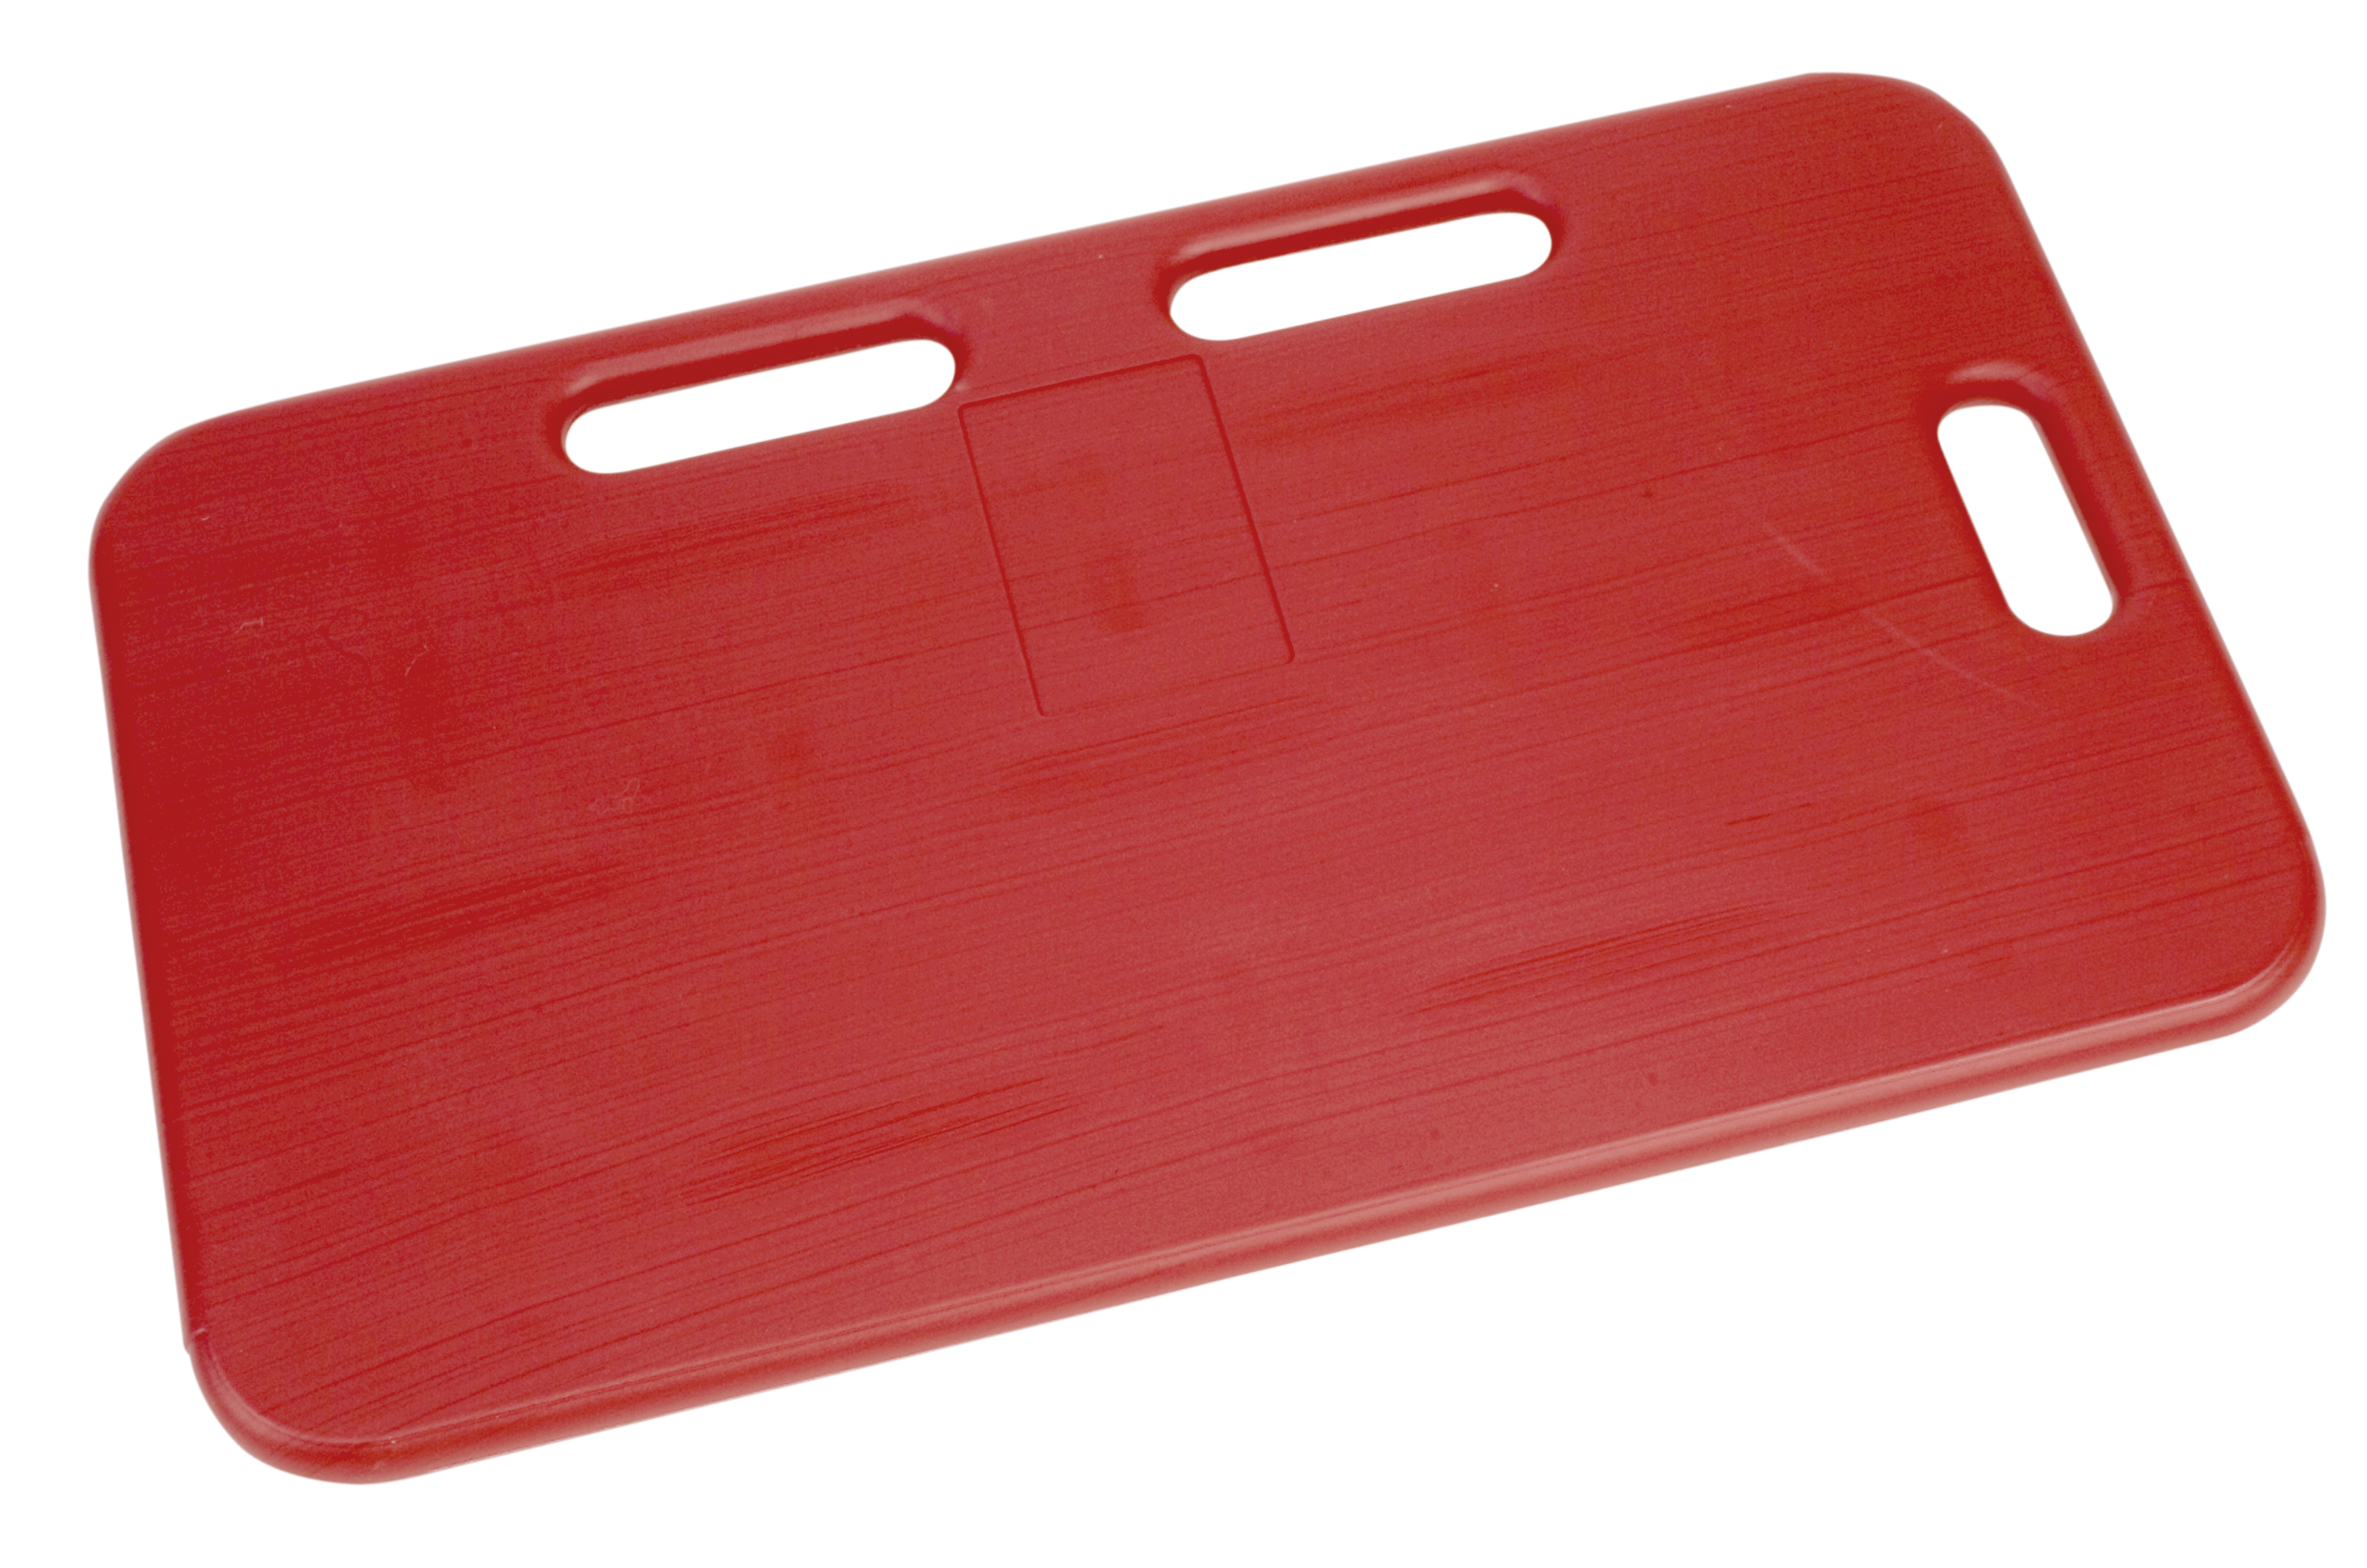 KRUUSE Pushing Plate, red, 96 x 76 cm